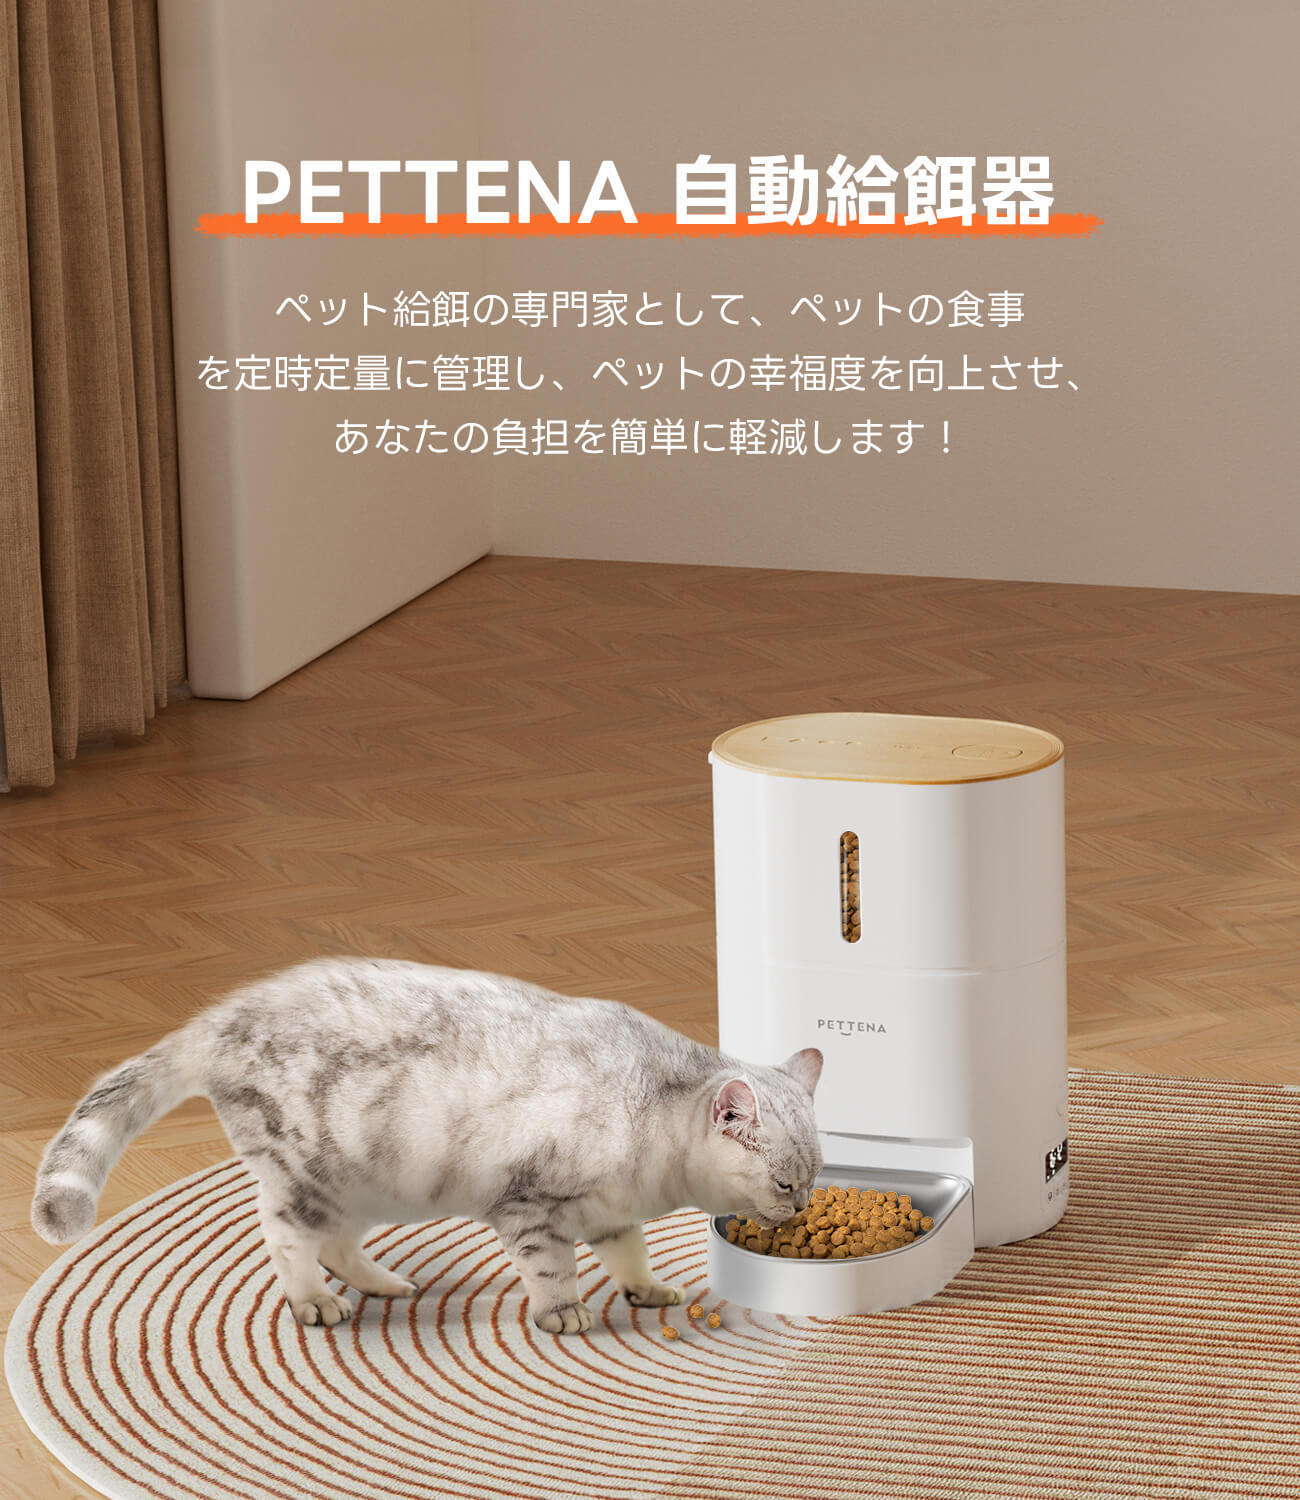 PETTENA 自動給餌器-健康的な給餌 - 空調